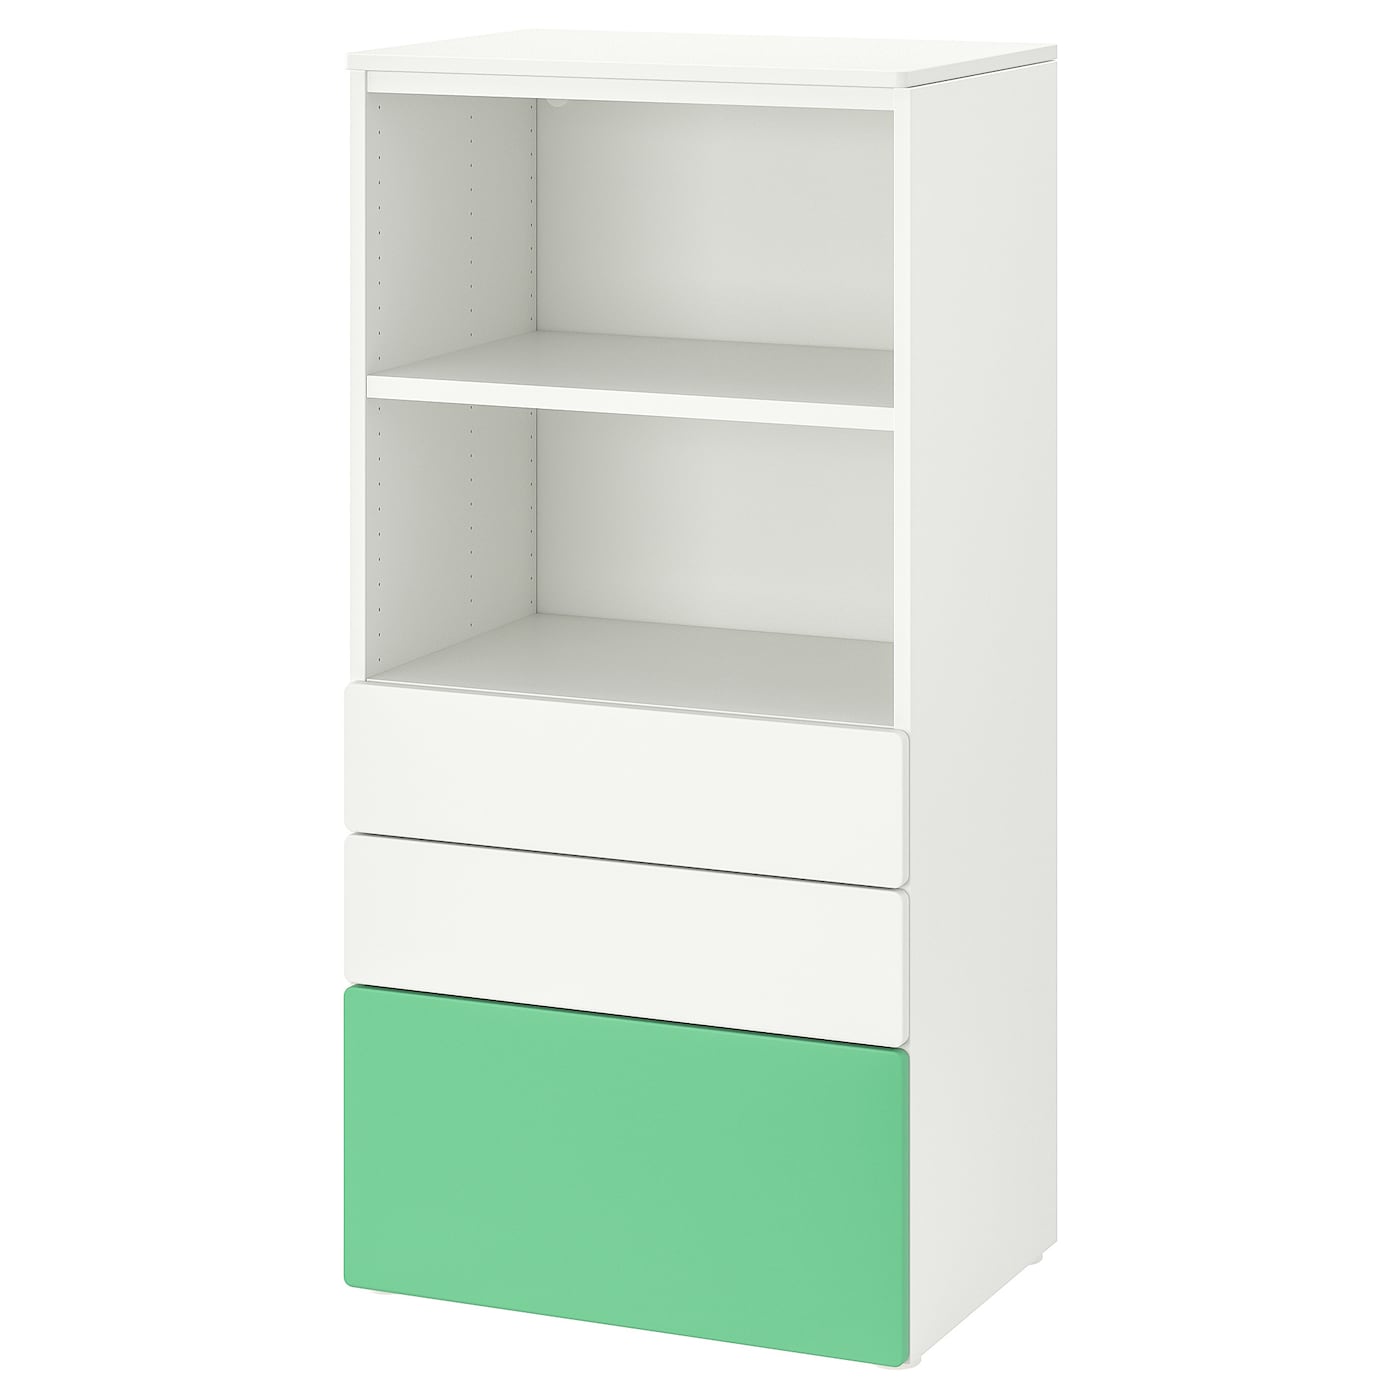 Шкаф - PLATSA/ SMÅSTAD / SMАSTAD  IKEA/ ПЛАТСА/СМОСТАД  ИКЕА, 60x42x123 см, белый/зеленый